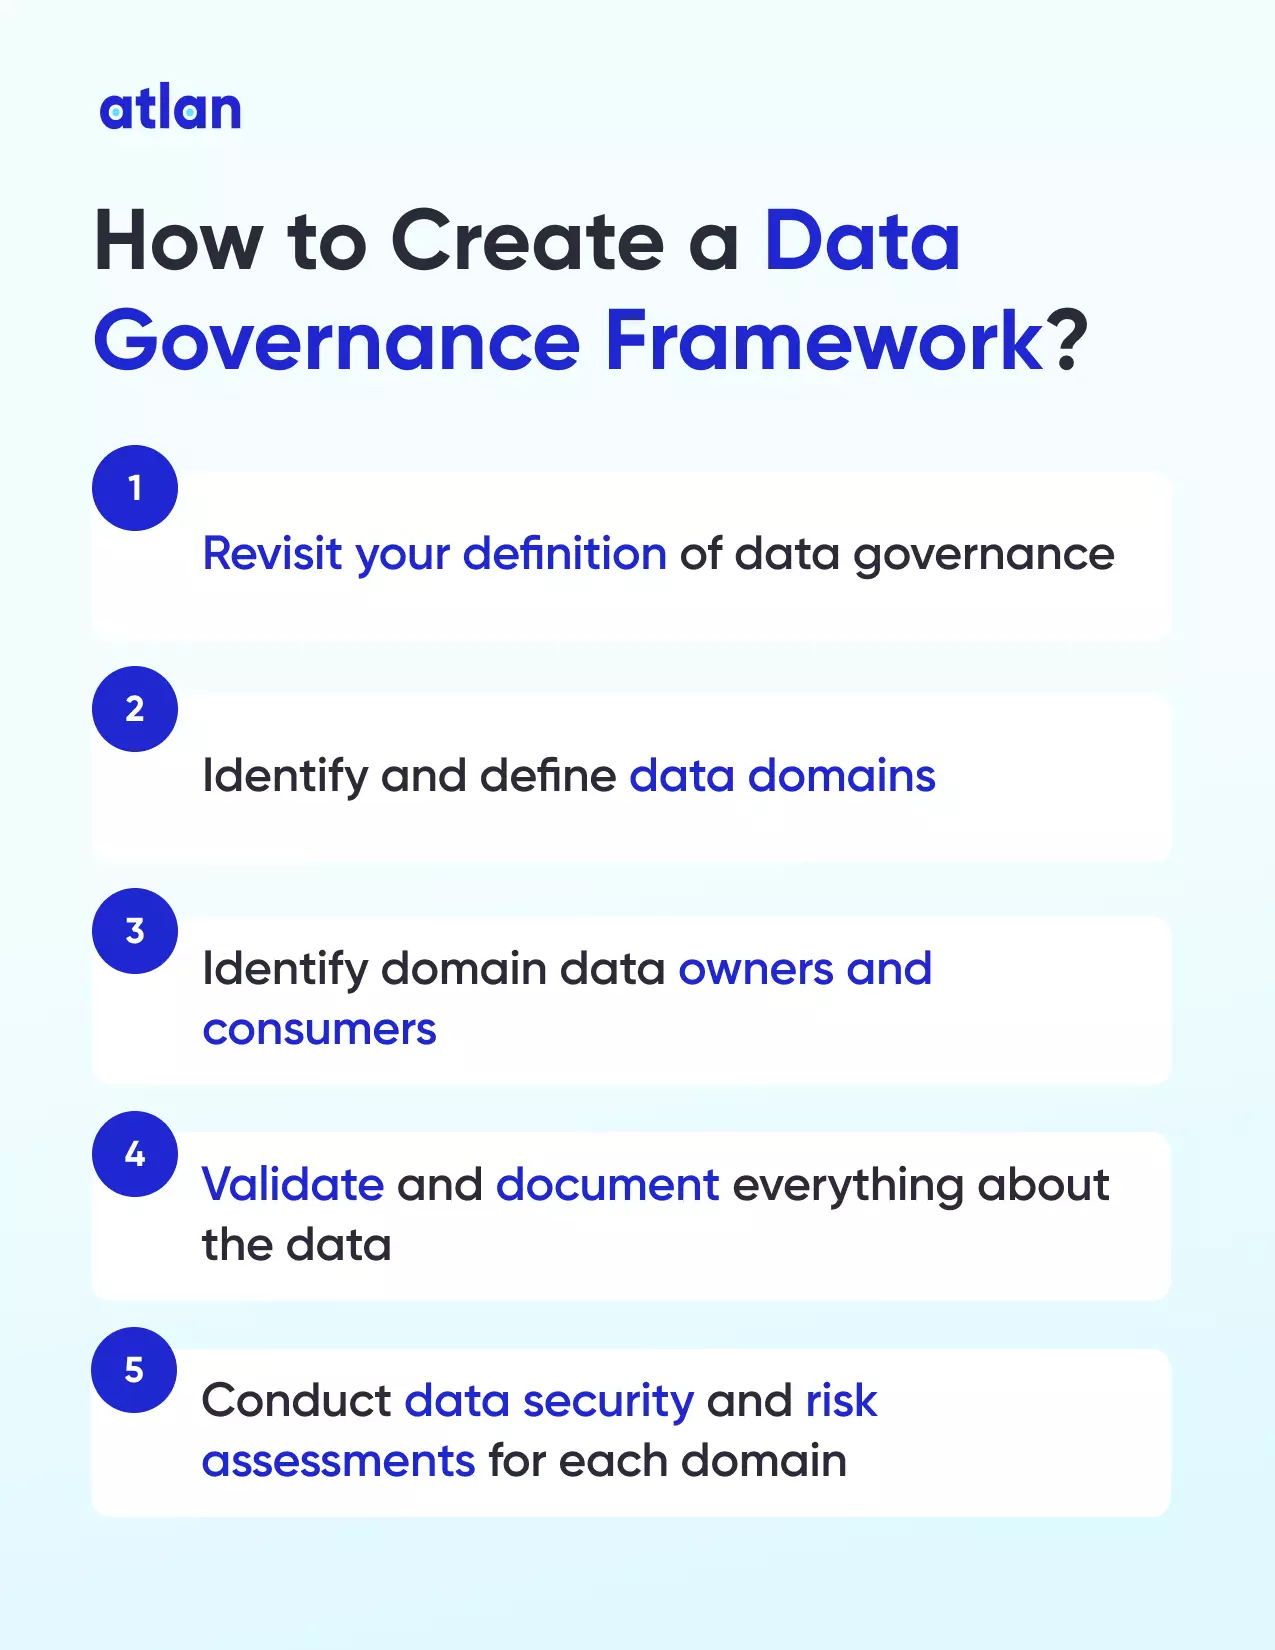 How to create a data governance framework?